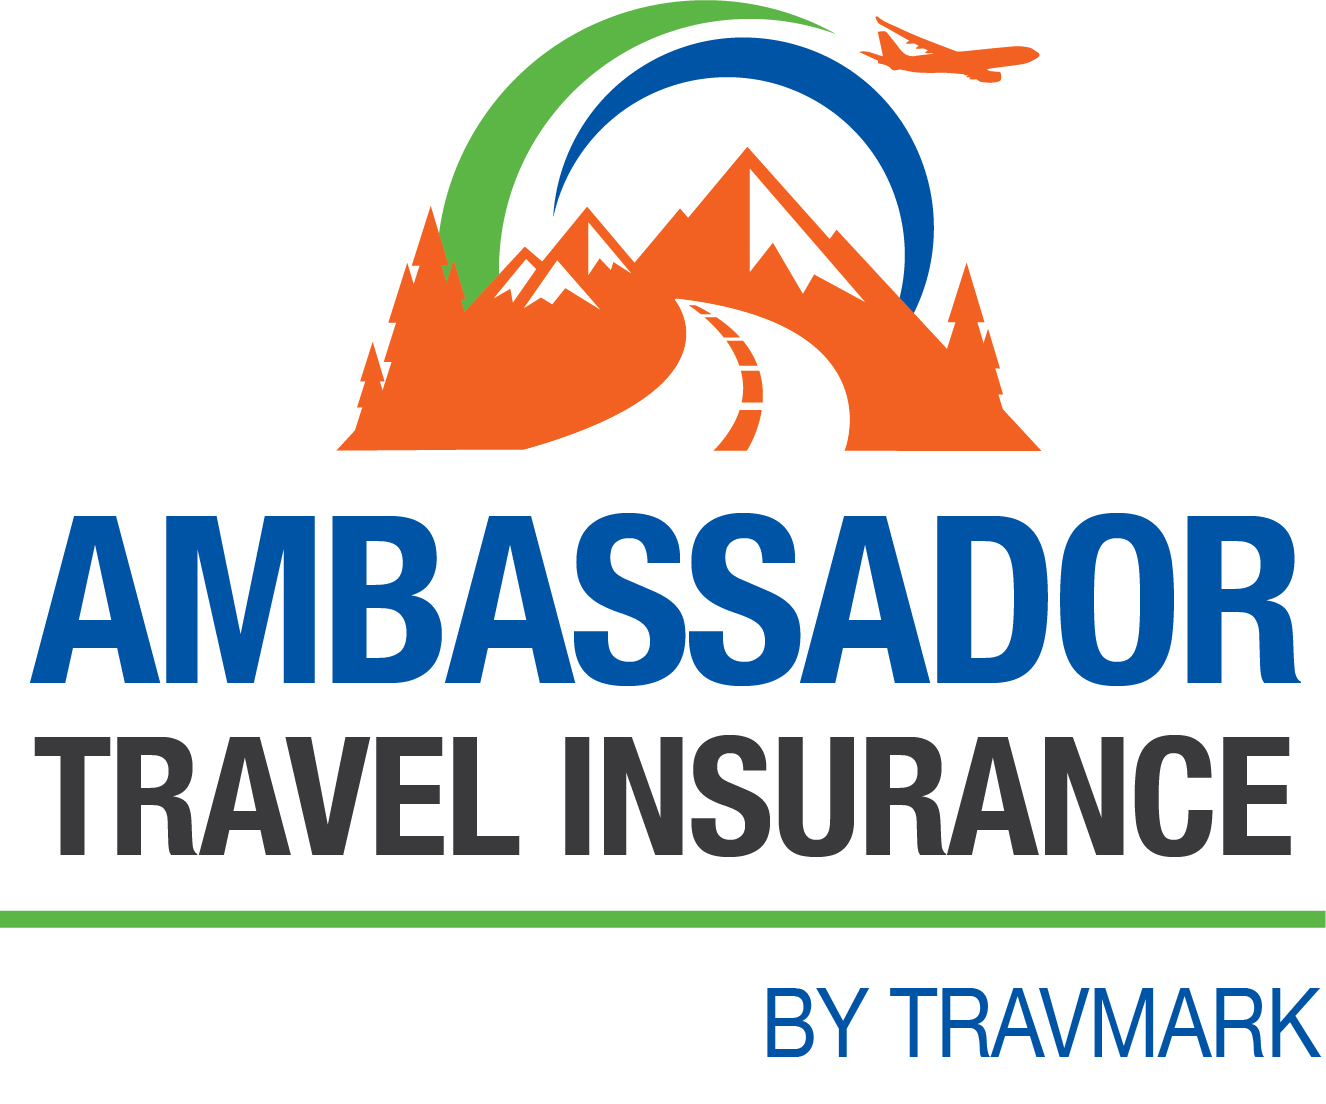 Ambassador Travel Insurance